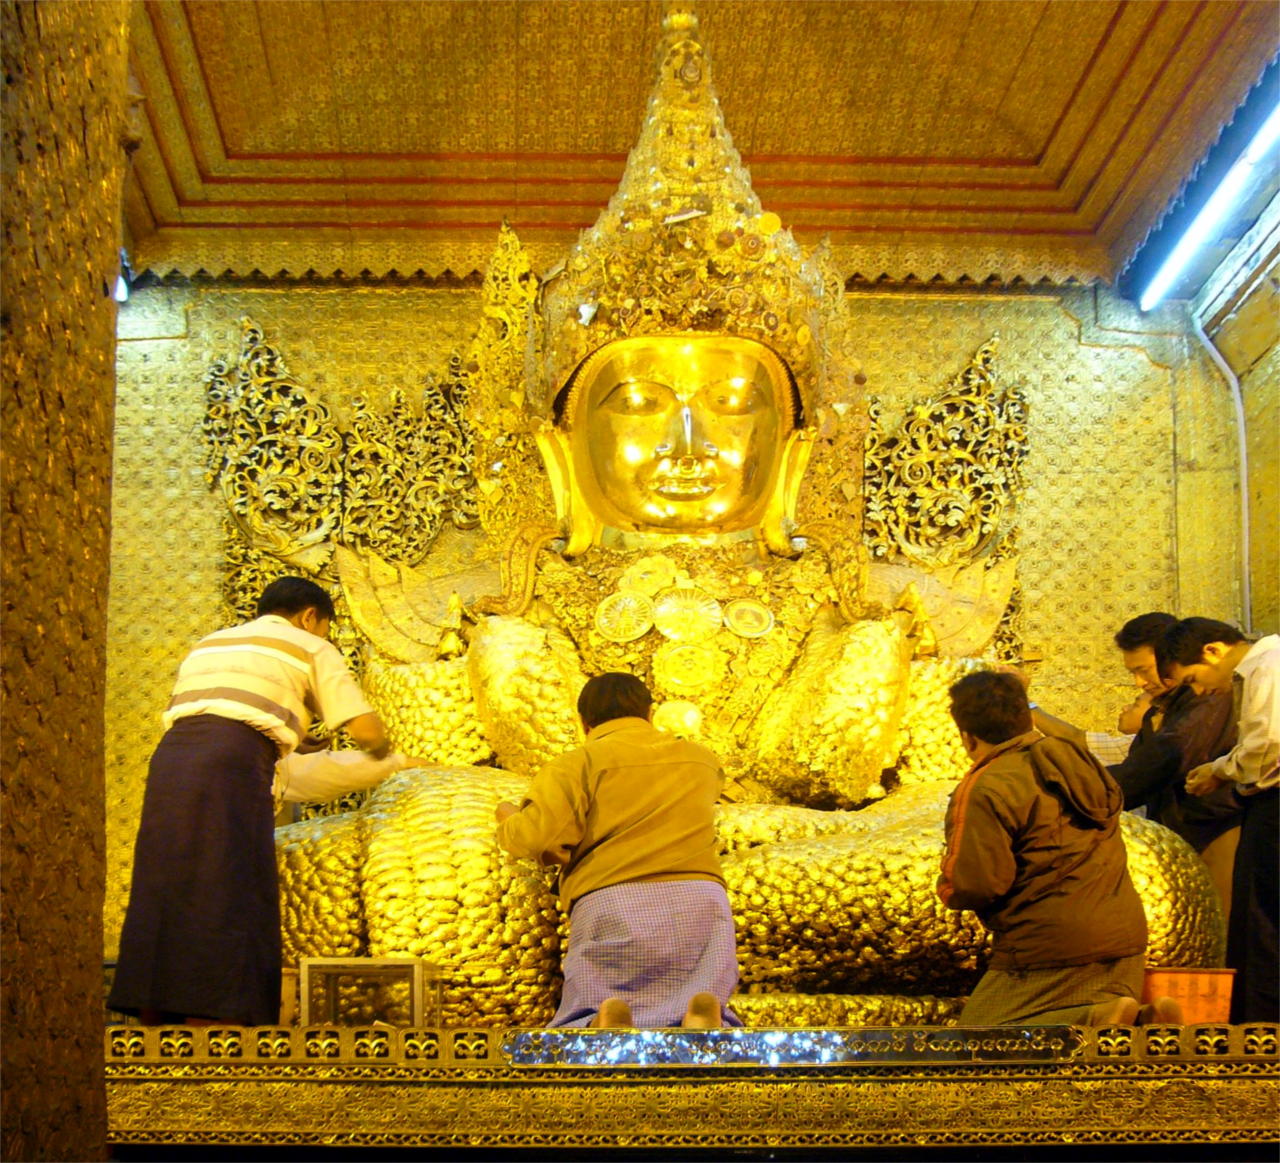  Goldener Mandalay Buddha mit 30 cm Gold